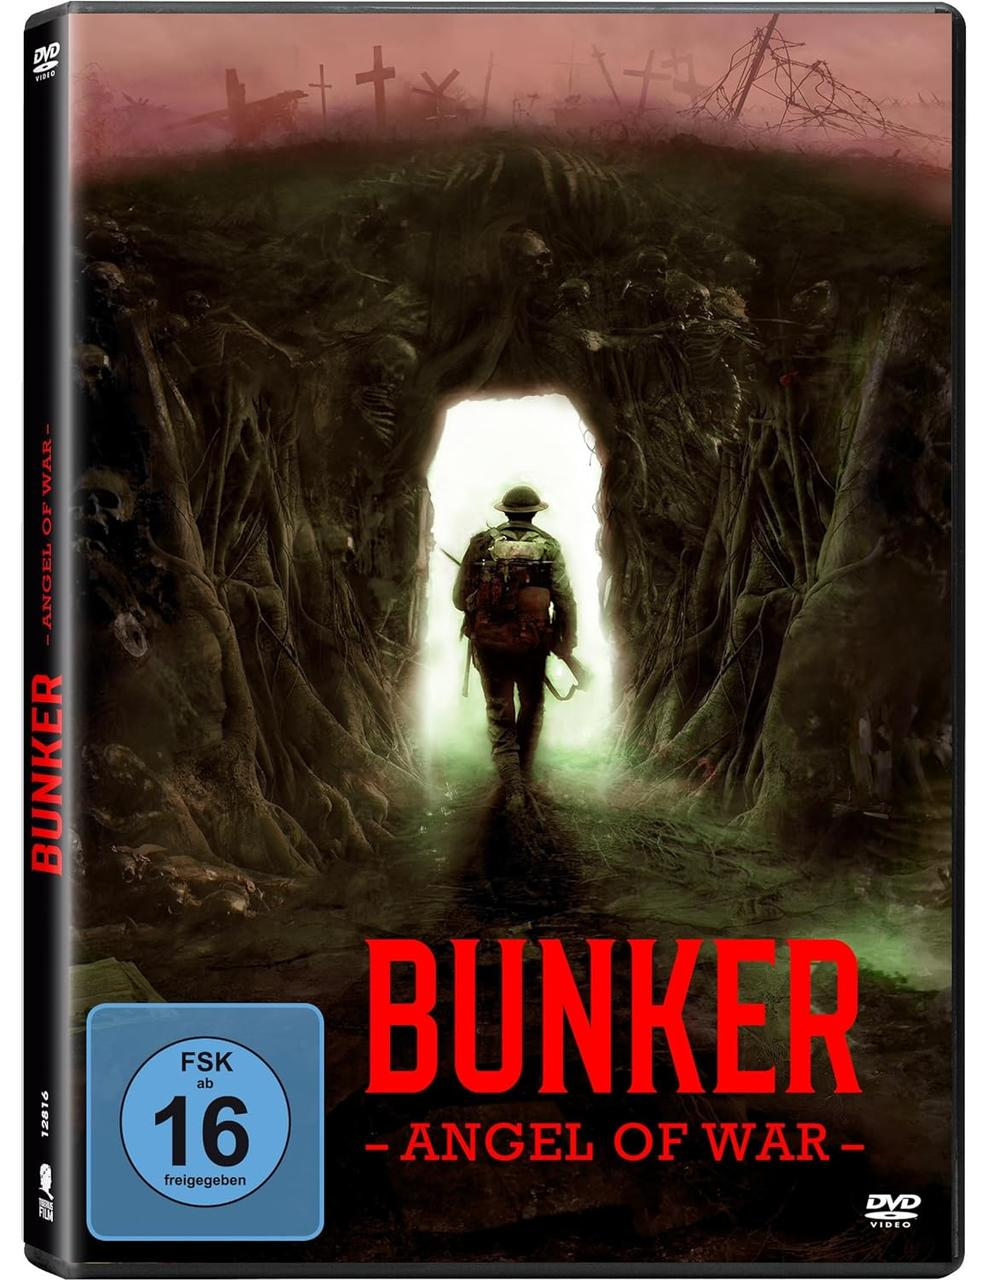 The Bunker - Angel War DVD of